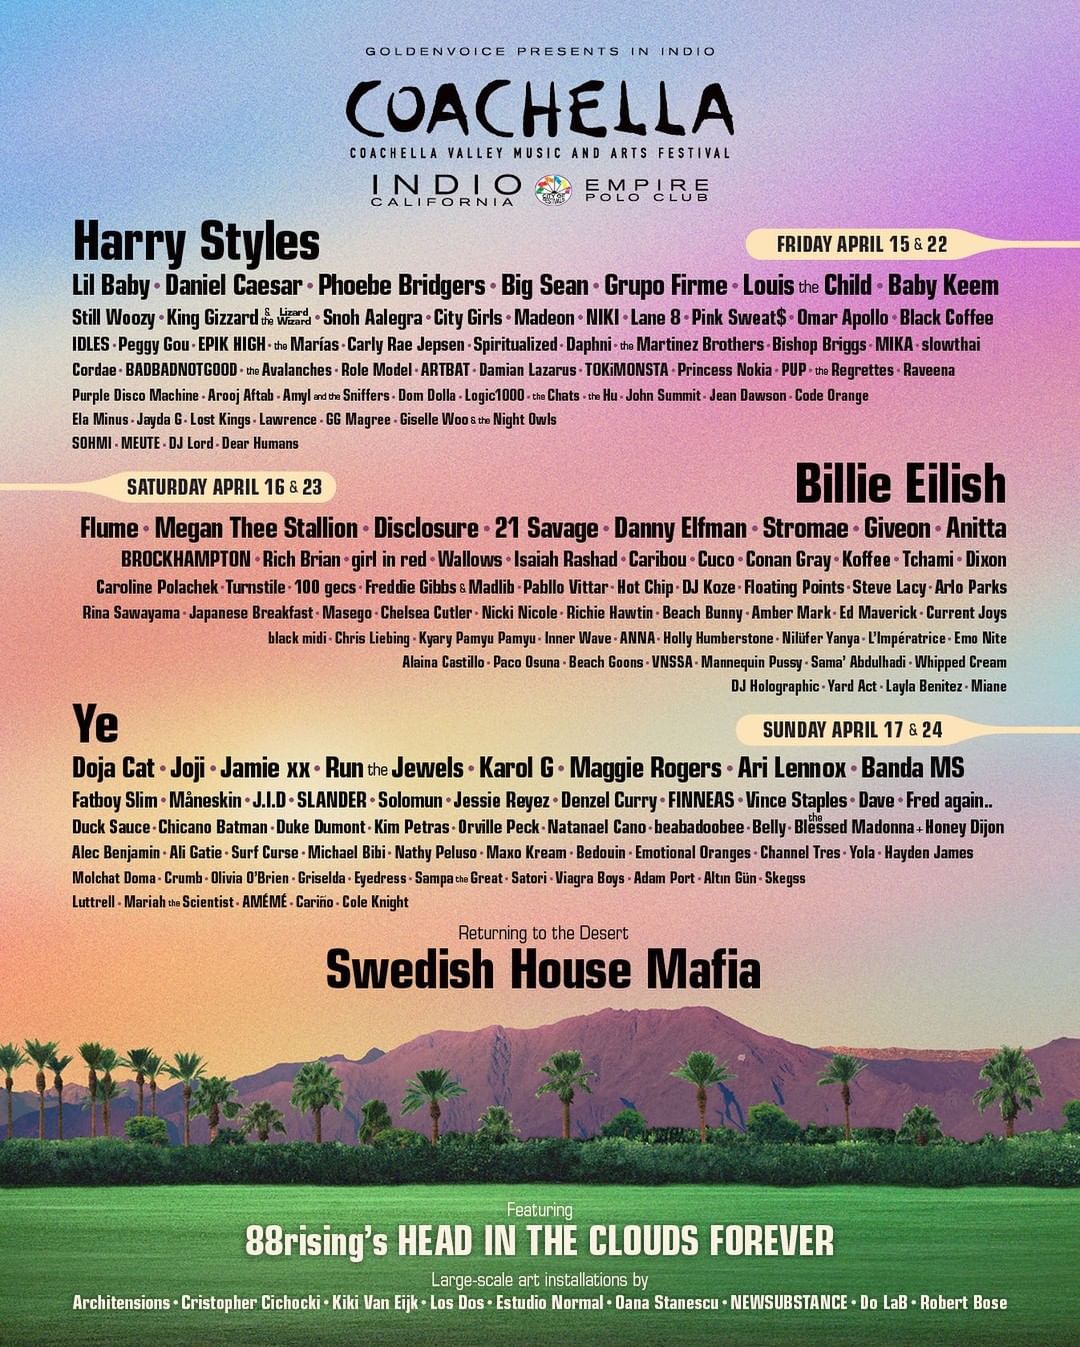 Coachella 2022: Billie Eilish, Harry Styles, and Ye are headliners